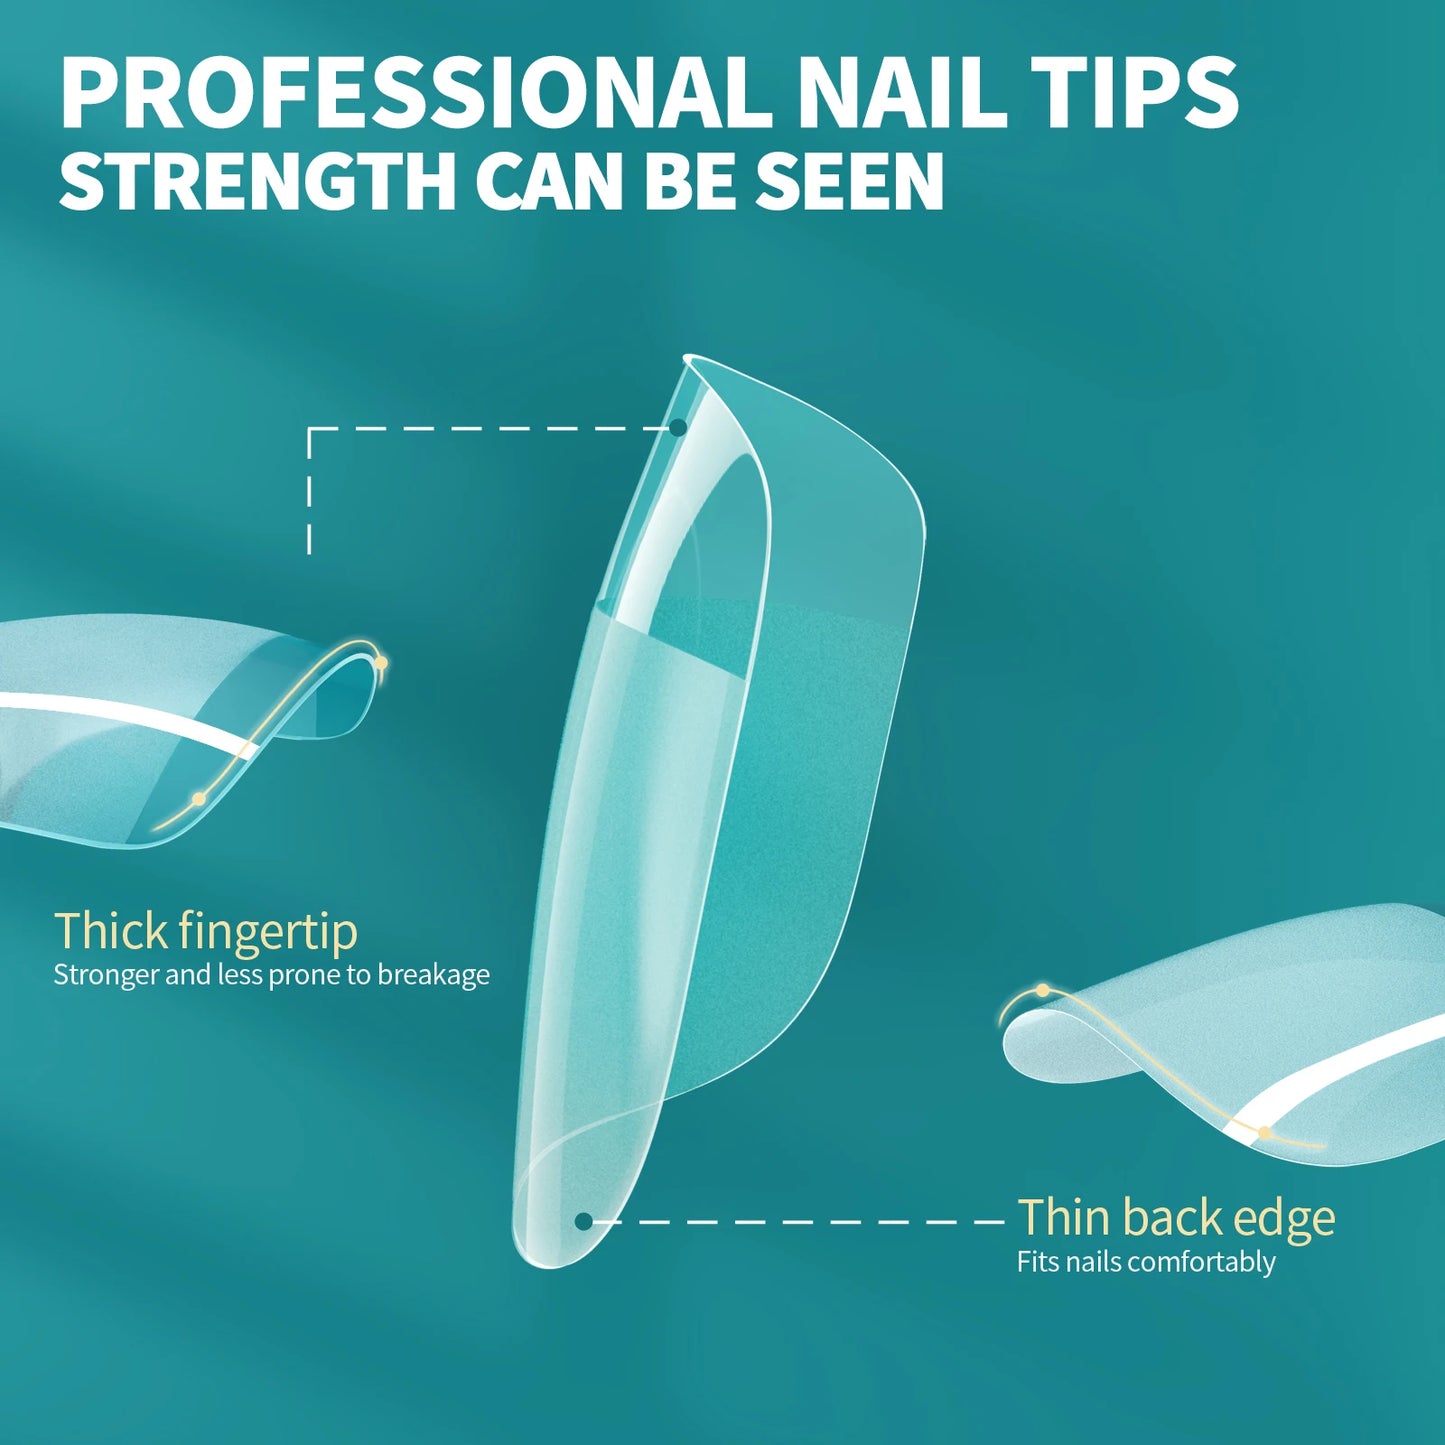 🍒Nailpop Extra Short Nail Capsule Half Matte Fake Nail Tips Almond Coffin Square Full Cover Acrylic Artificial Nails 600/120pcs